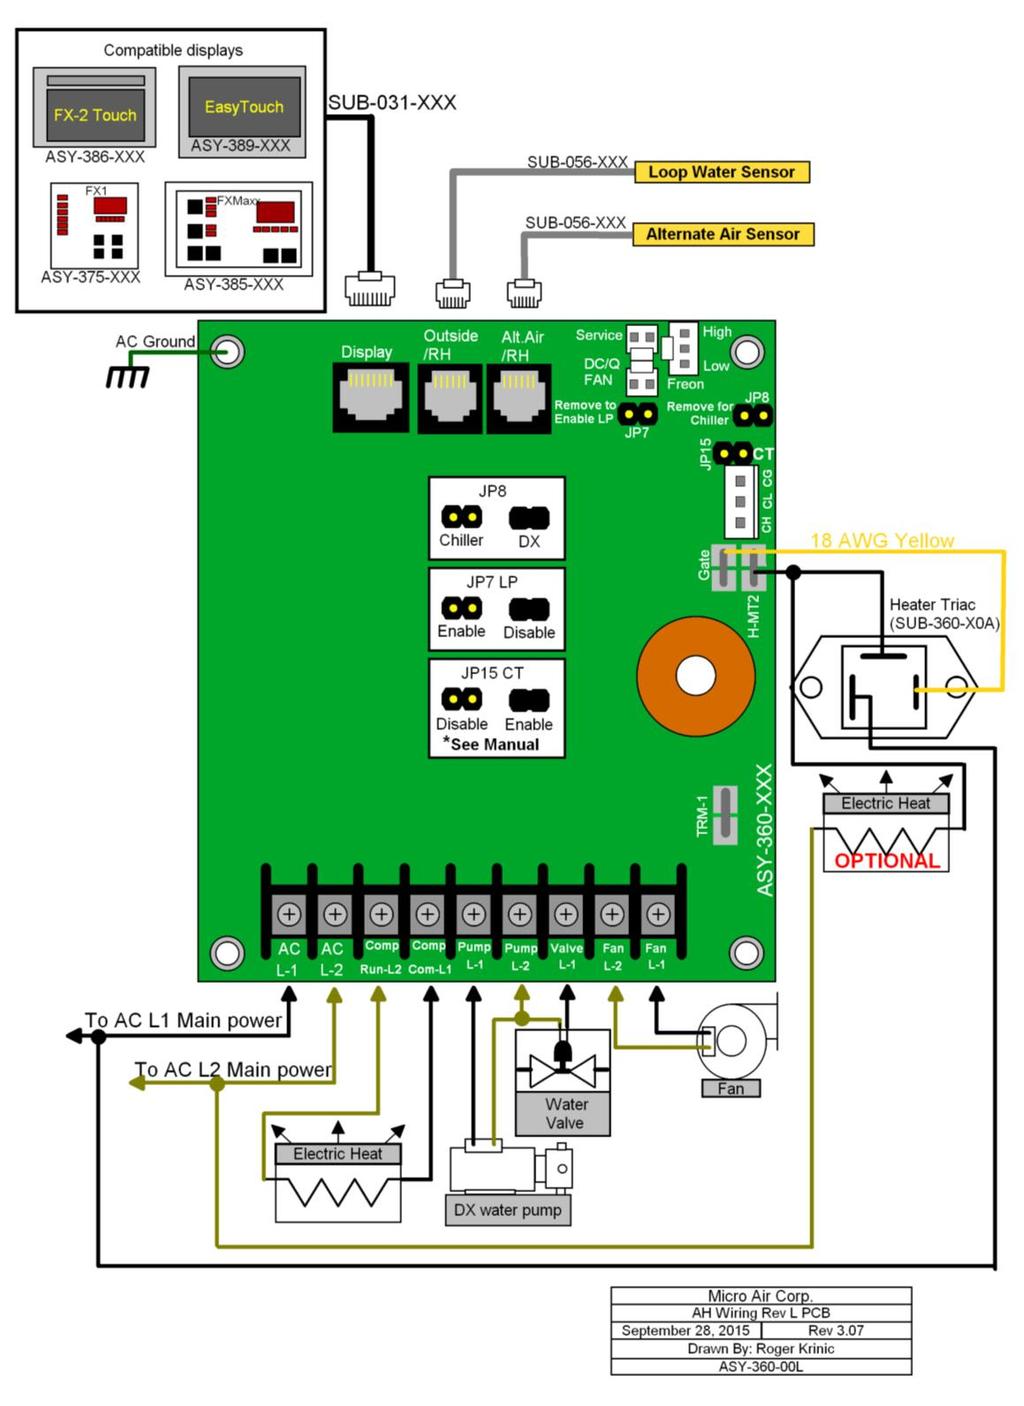 Rev L and M PCB Air Handler (AH) Wiring: Rev L and M PCB (Rev L shown.